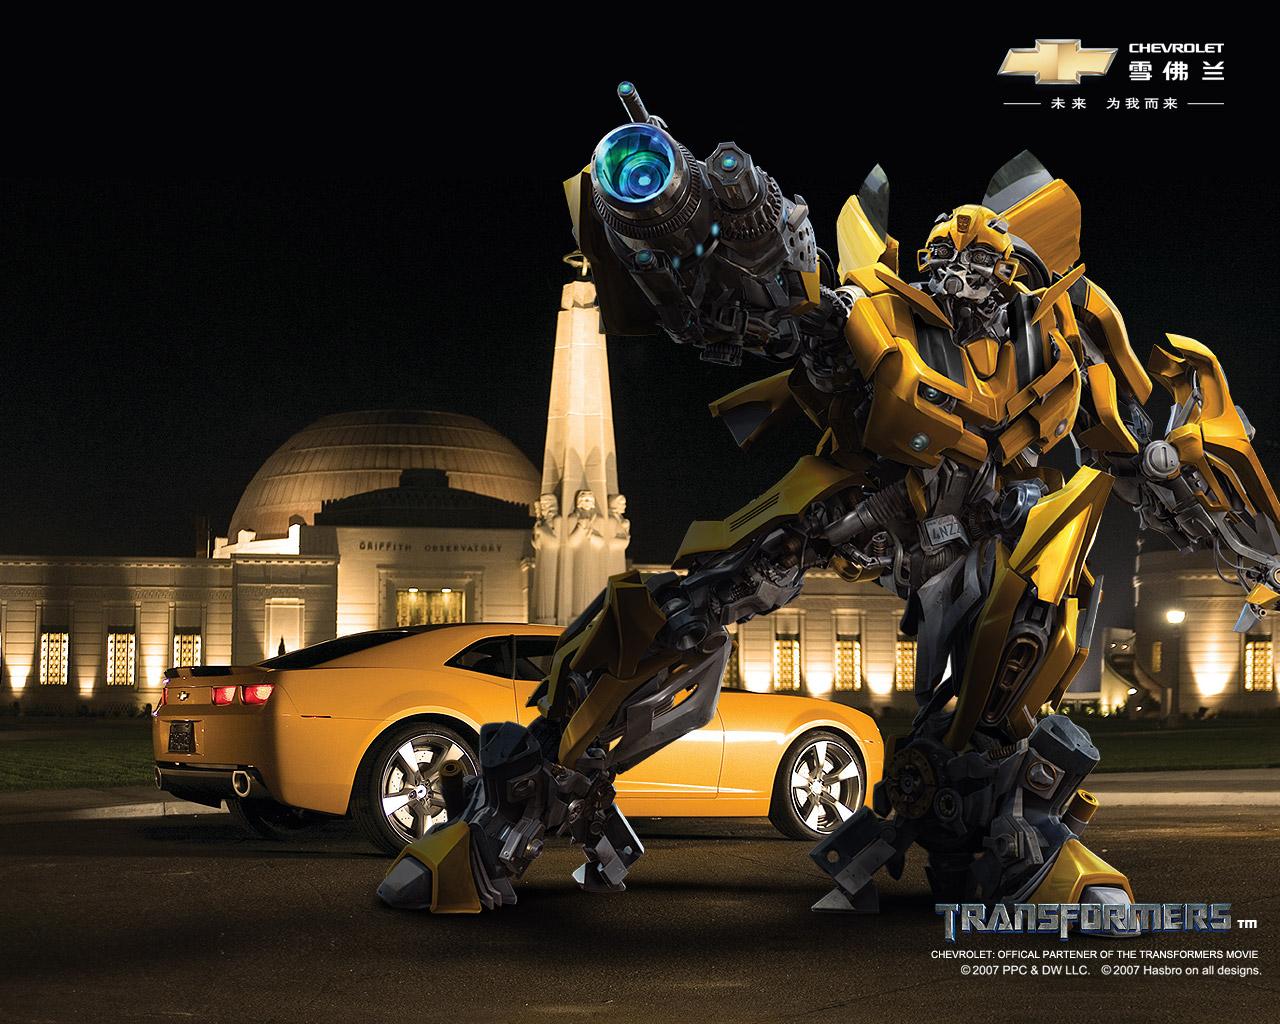  Transformers Hintergrundbild 1280x1024. Desktop Hintergrundbilder Transformers 1 Transformers (Film) Film